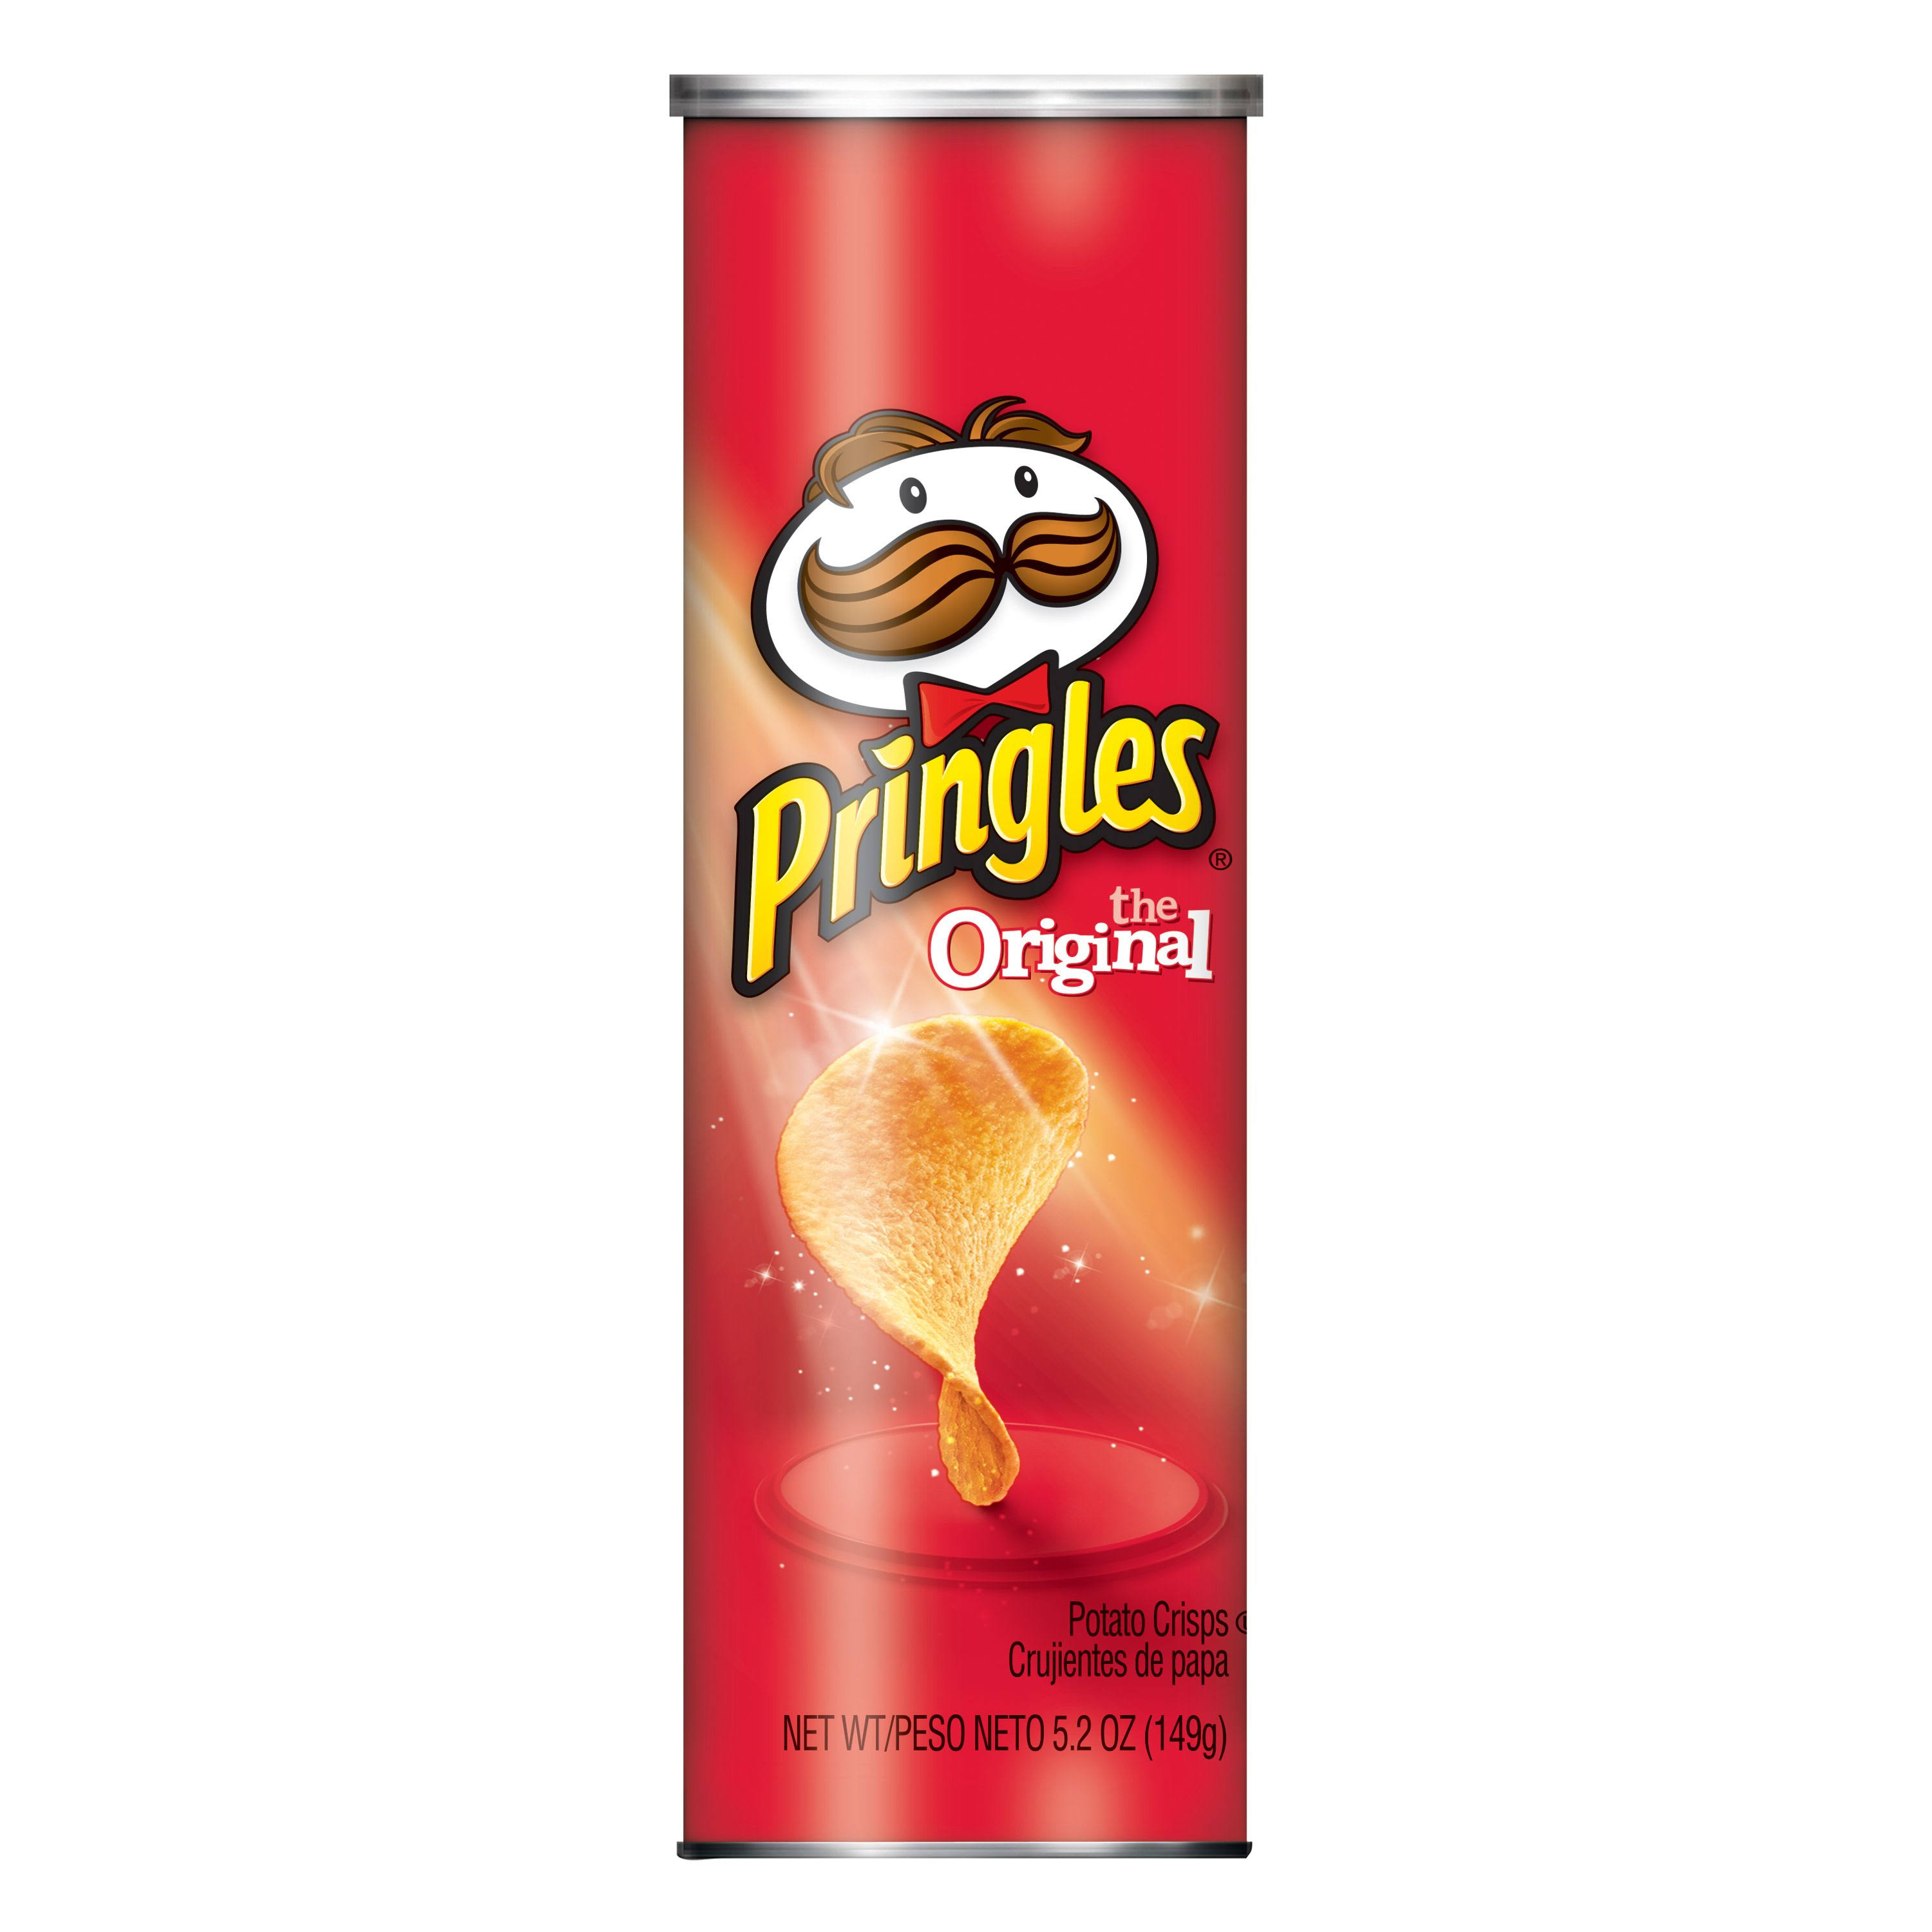 Pringles Potato Crisps - Original, 5.2oz